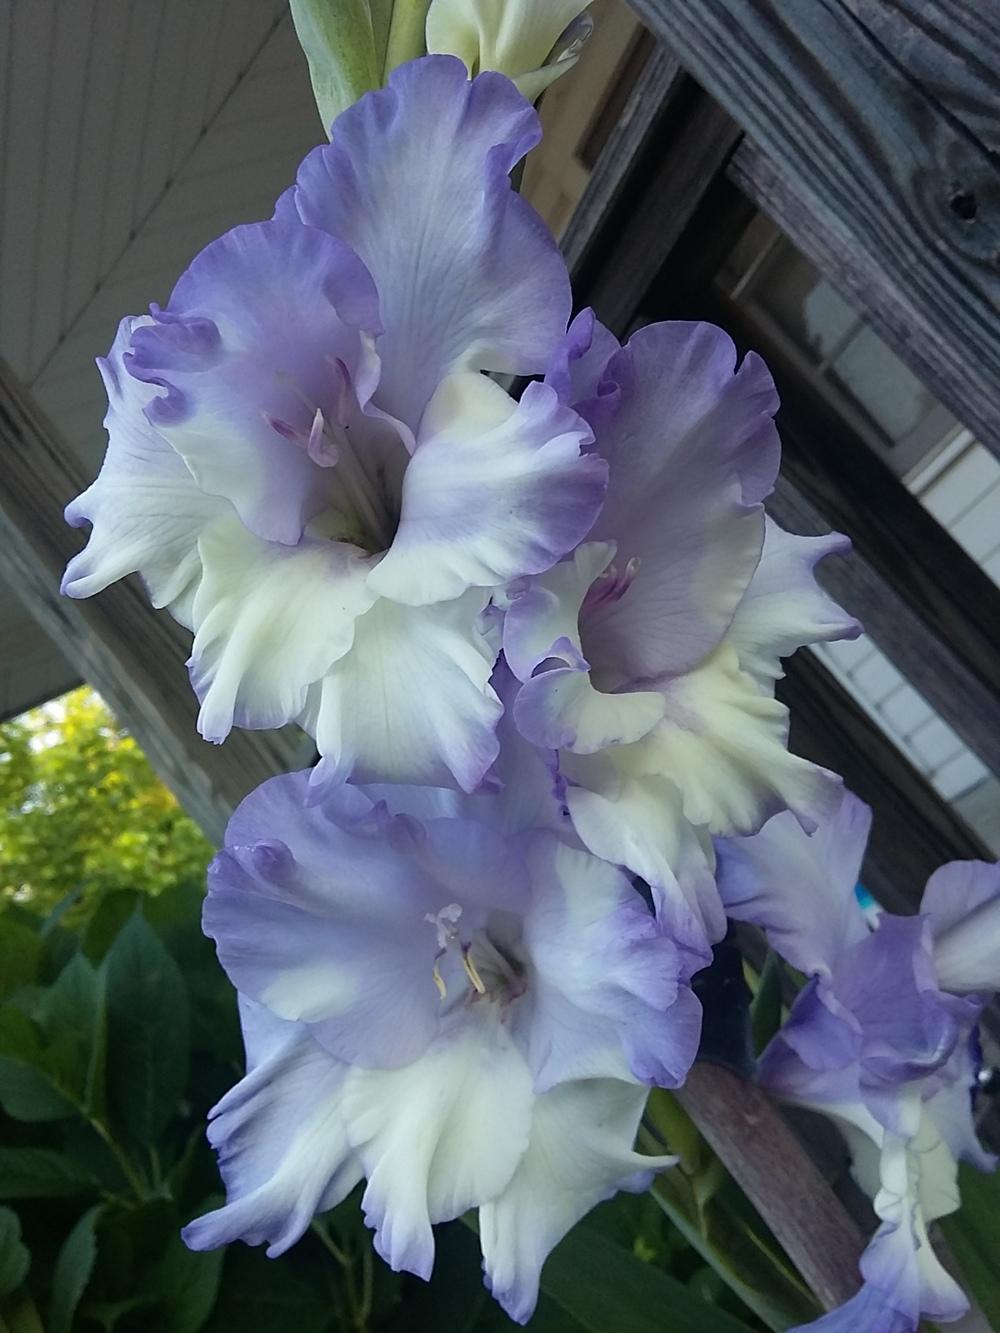 Photo of Gladiola (Gladiolus) uploaded by AmiC